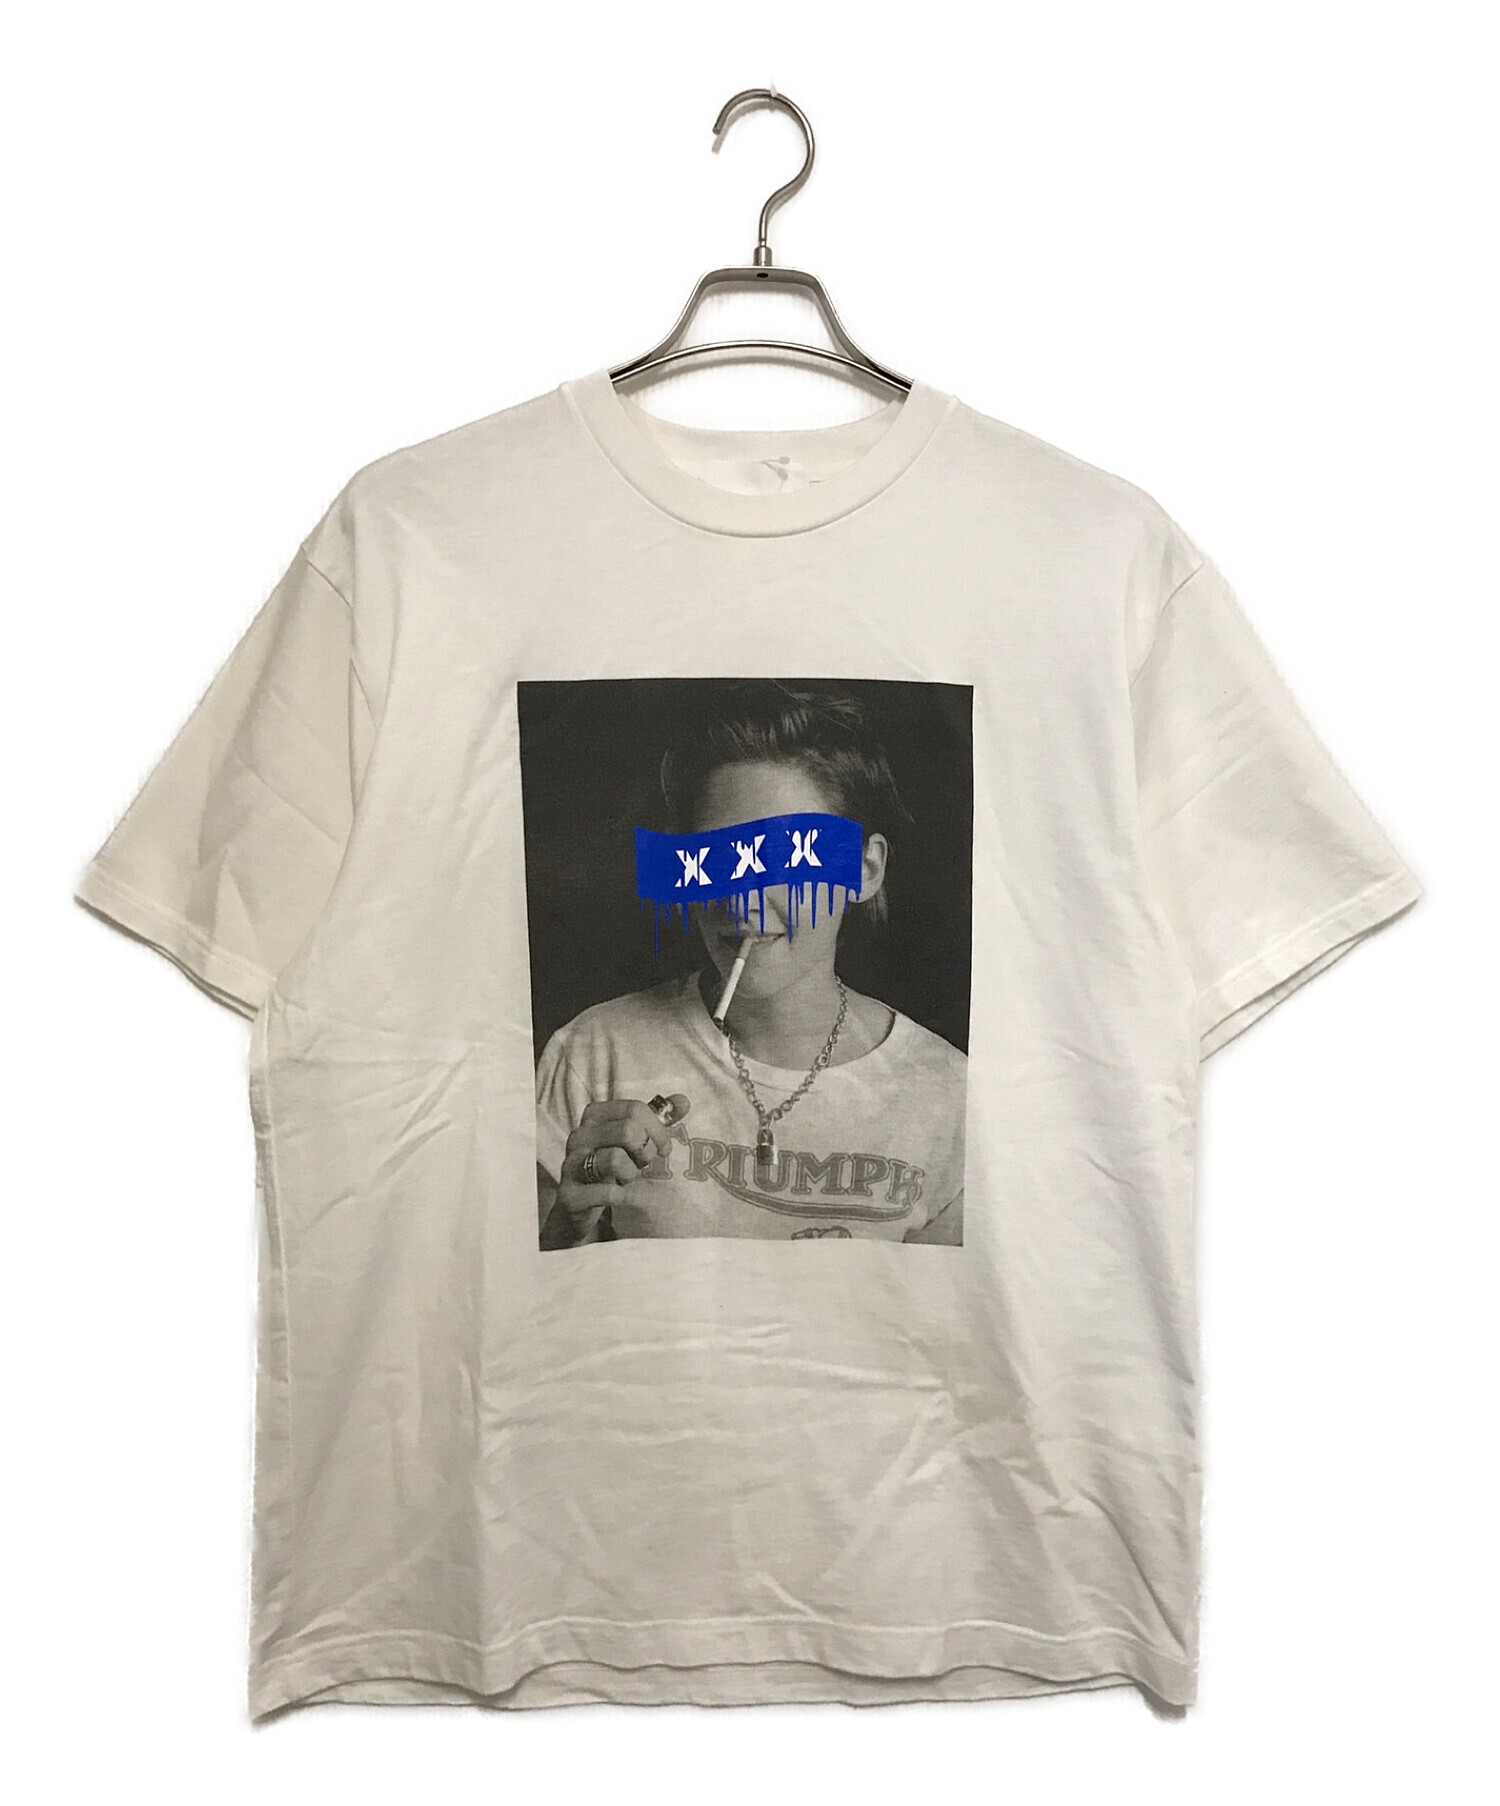 GOD SELECTION XXX　タグ付き　新品未使用　Tシャツ　Mサイズ